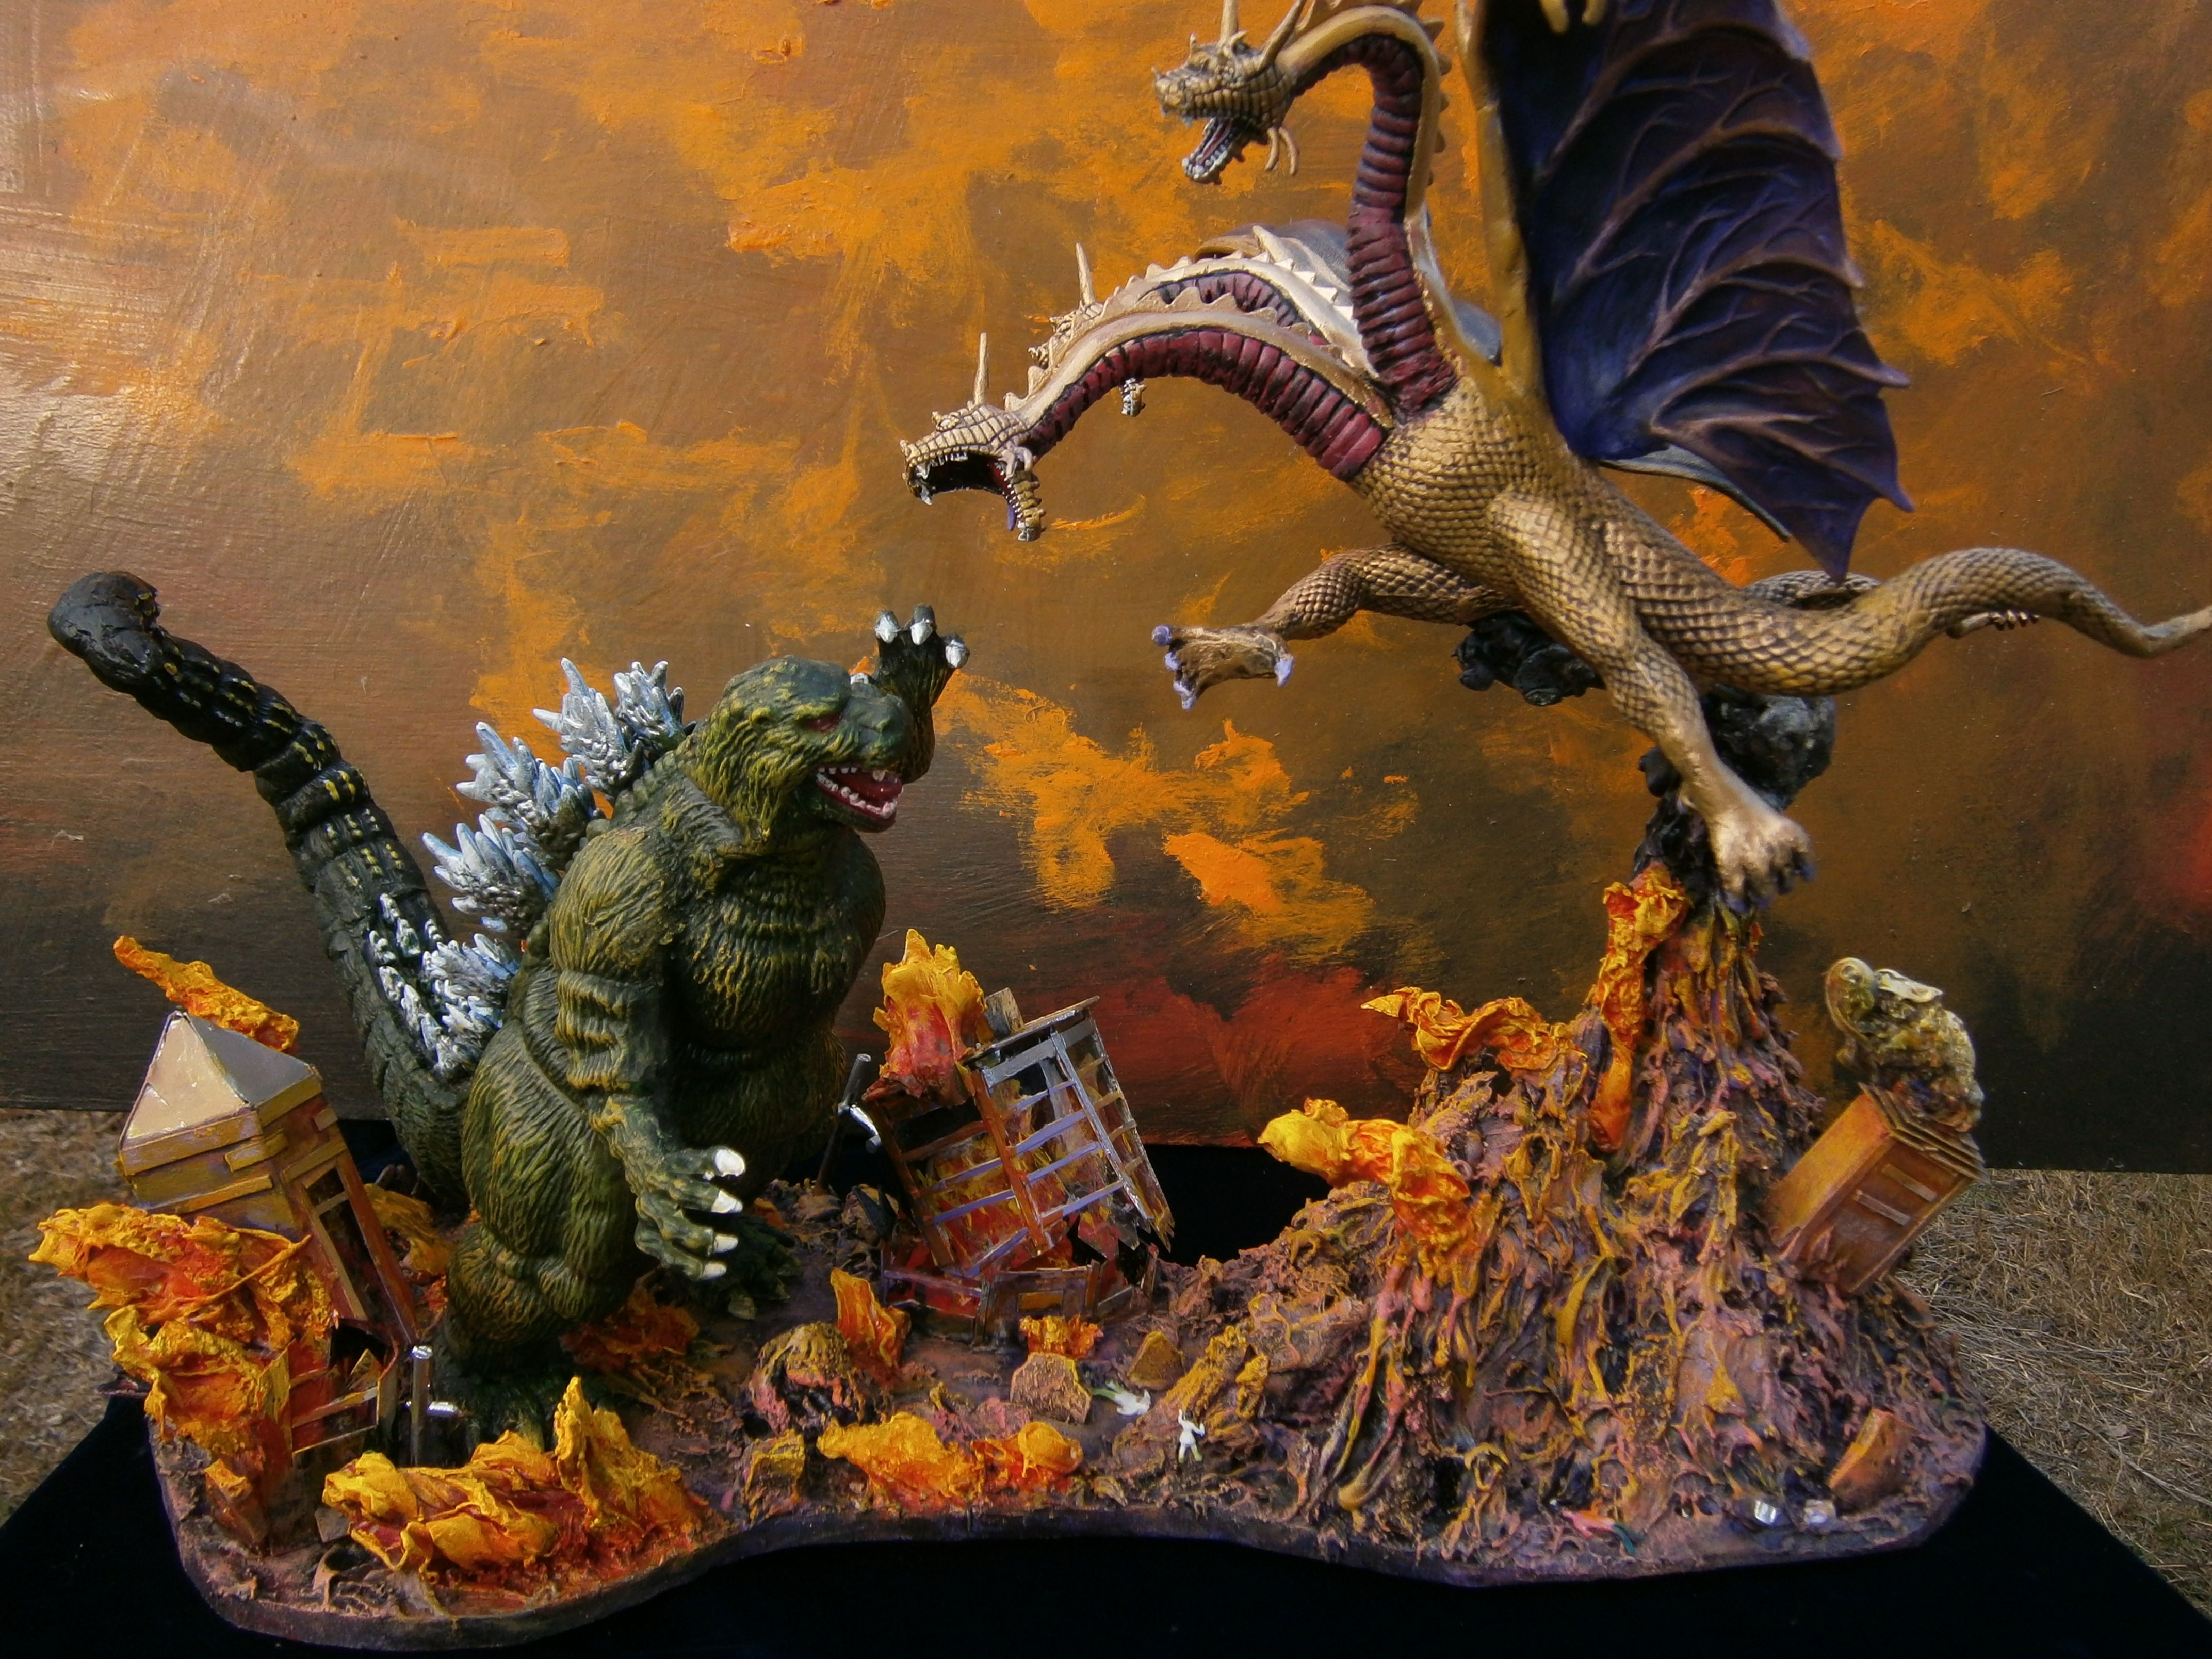 Godzilla vs. King Ghidorah 4k Ultra HD Wallpaper. Background Image